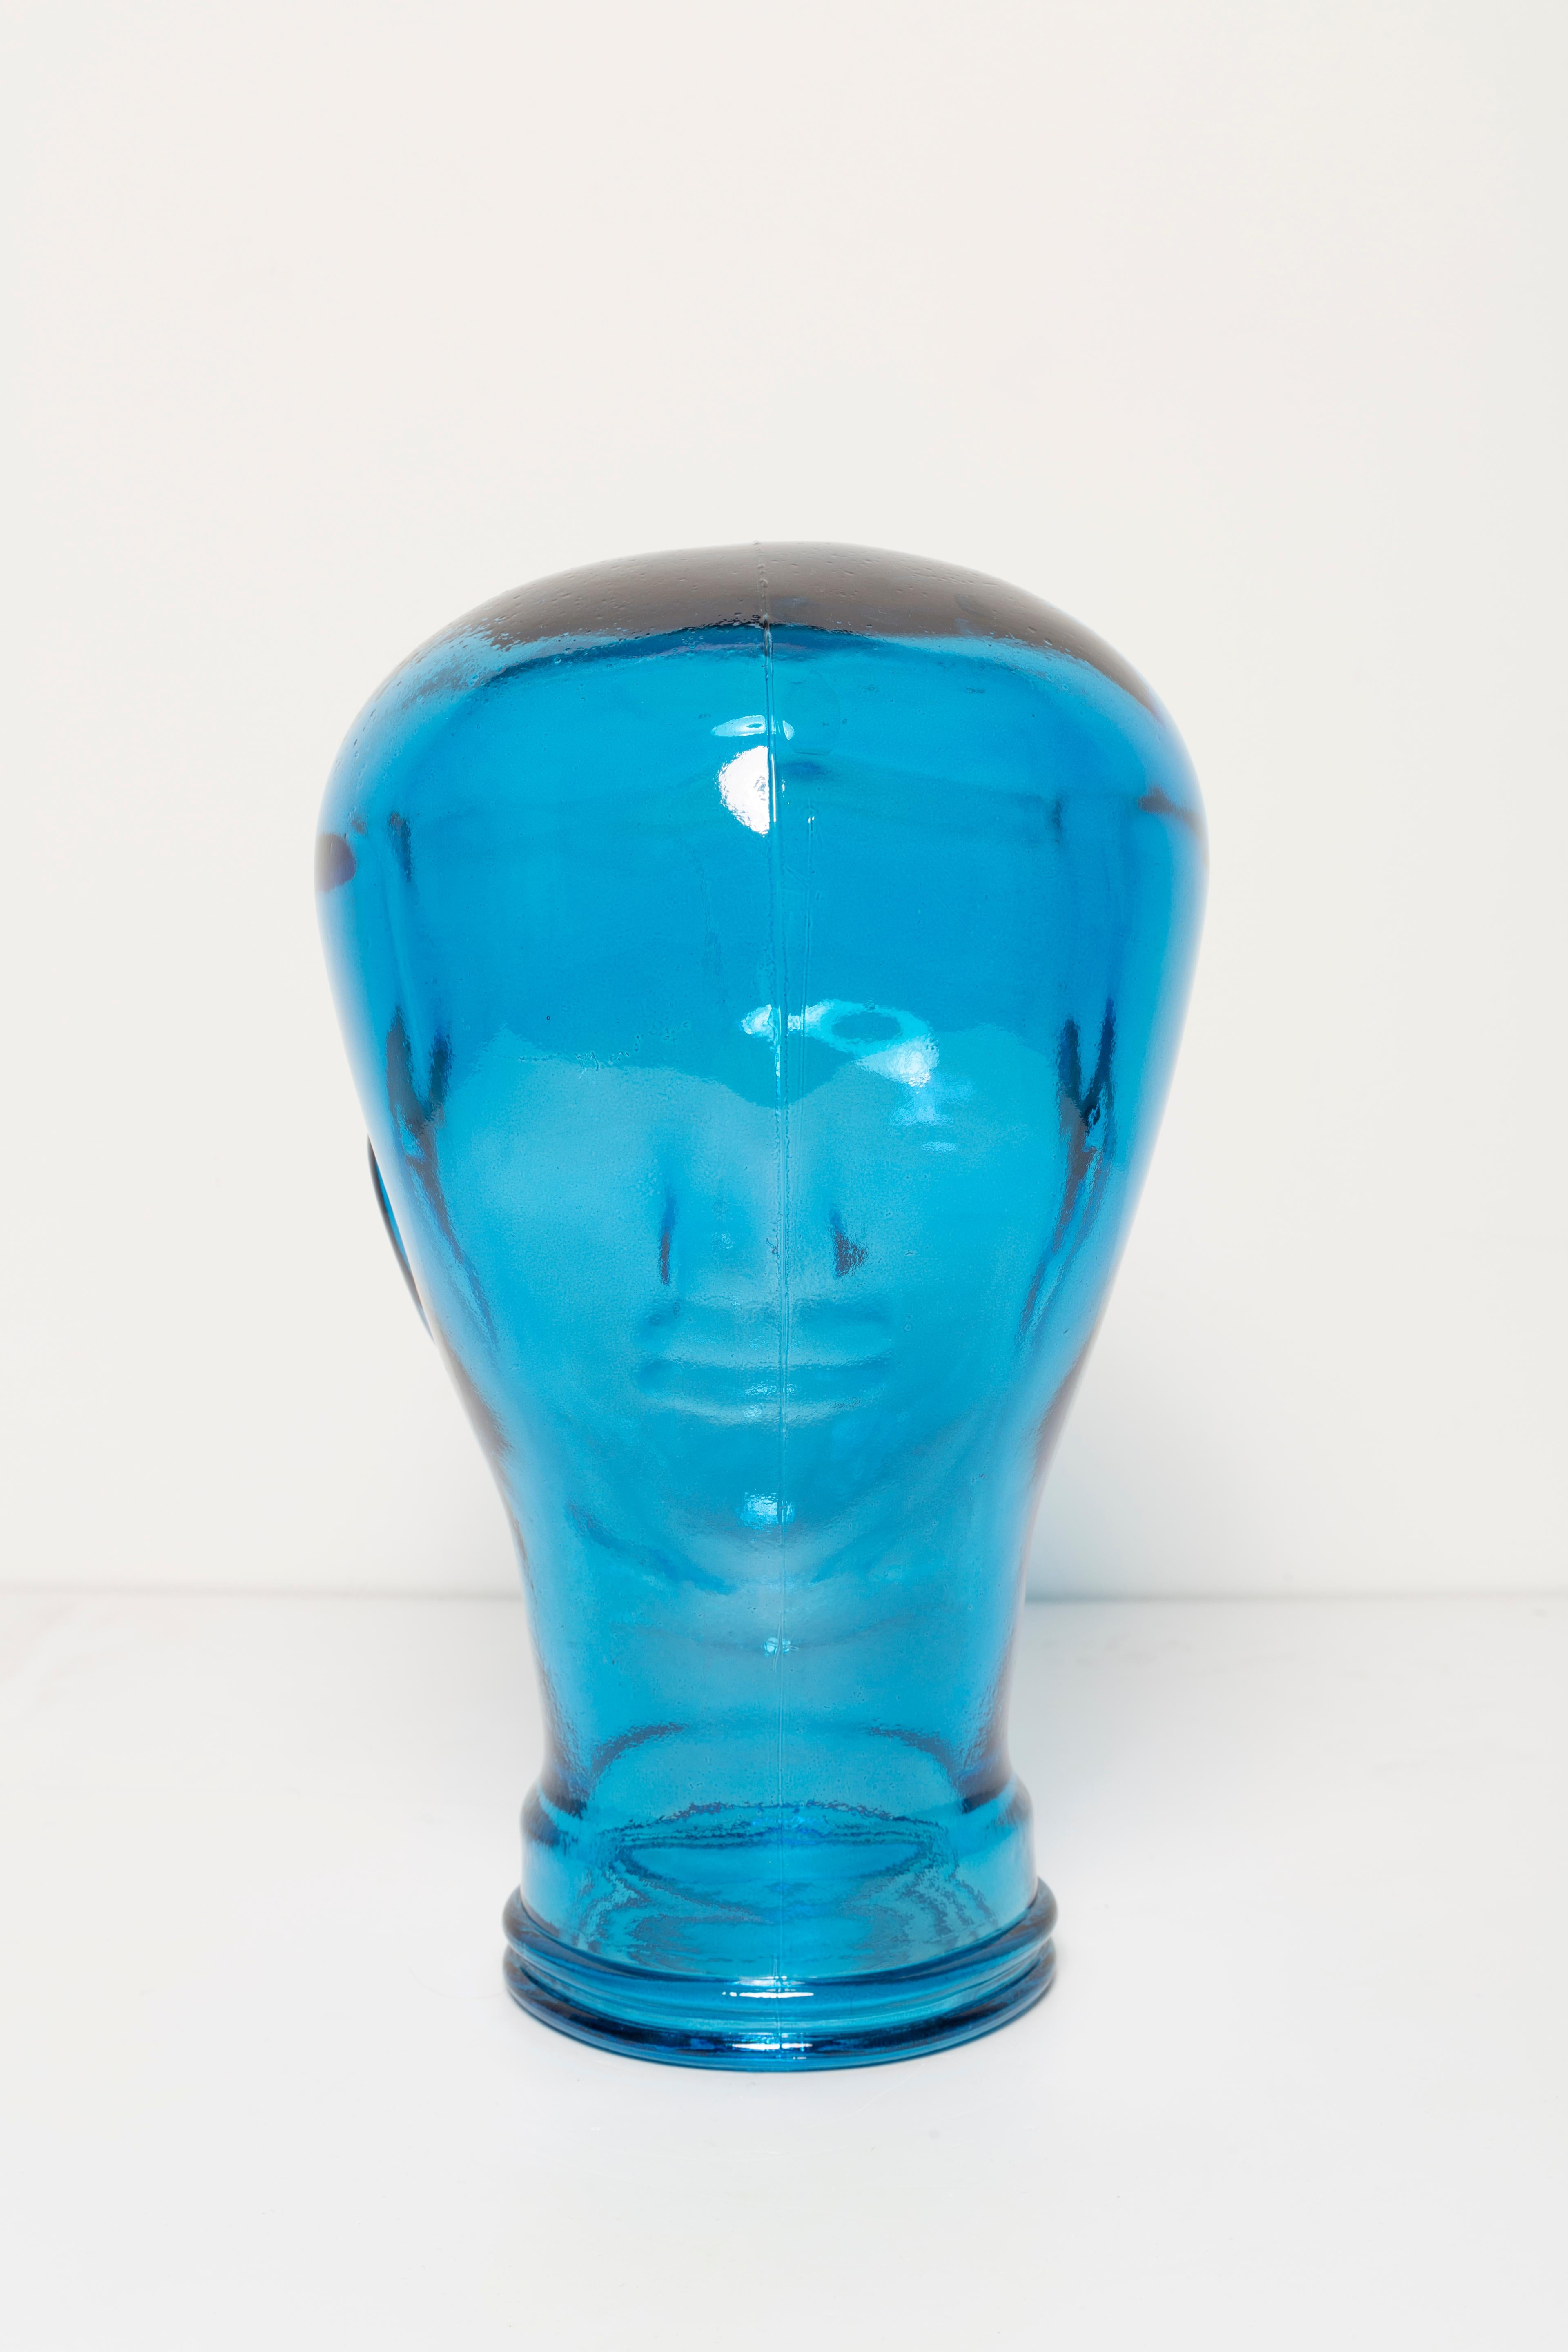 Blue Vintage Decorative Mannequin Glass Head Sculpture, 1970s, Germany For Sale 3